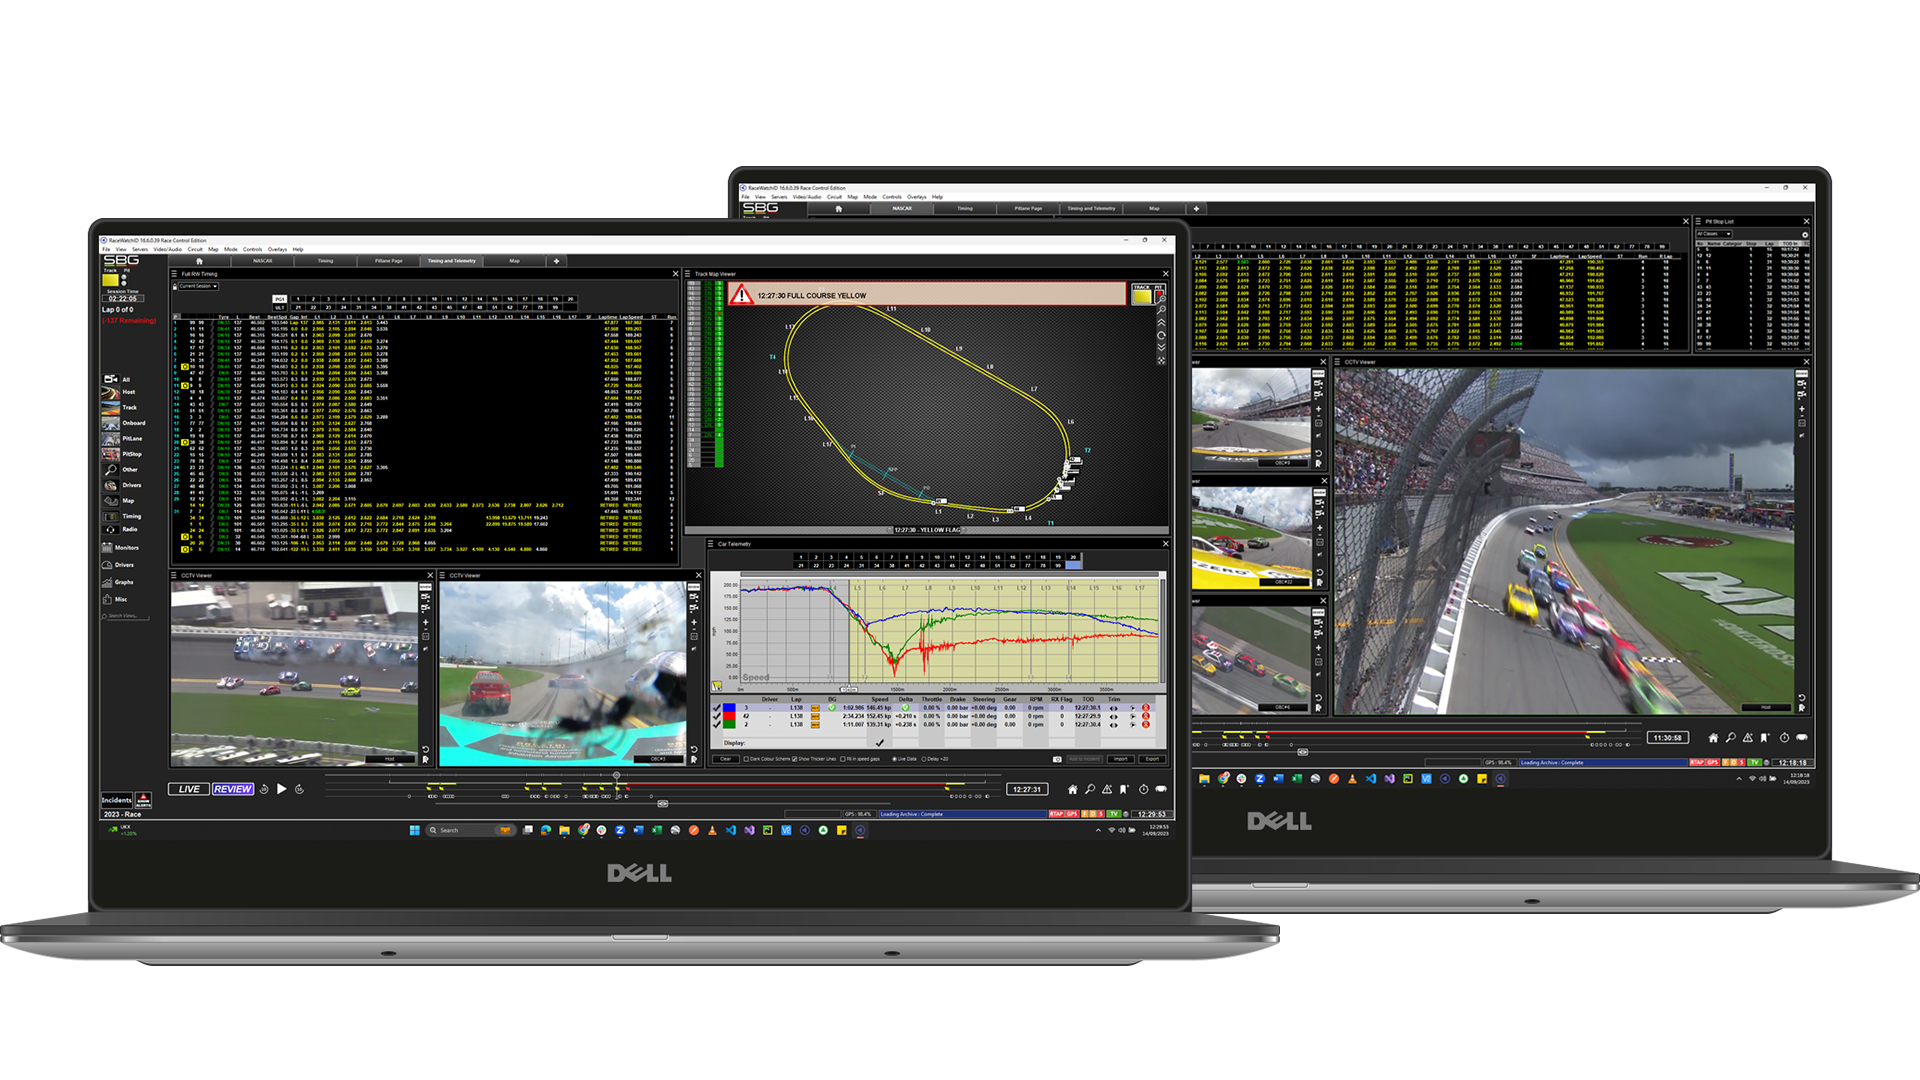 RaceWatch 套件包含复杂的数据分析、可视化、视频和策略系统，整个赛季的比赛组织者和车队在世界各地的赛道和车队工厂不断使用。